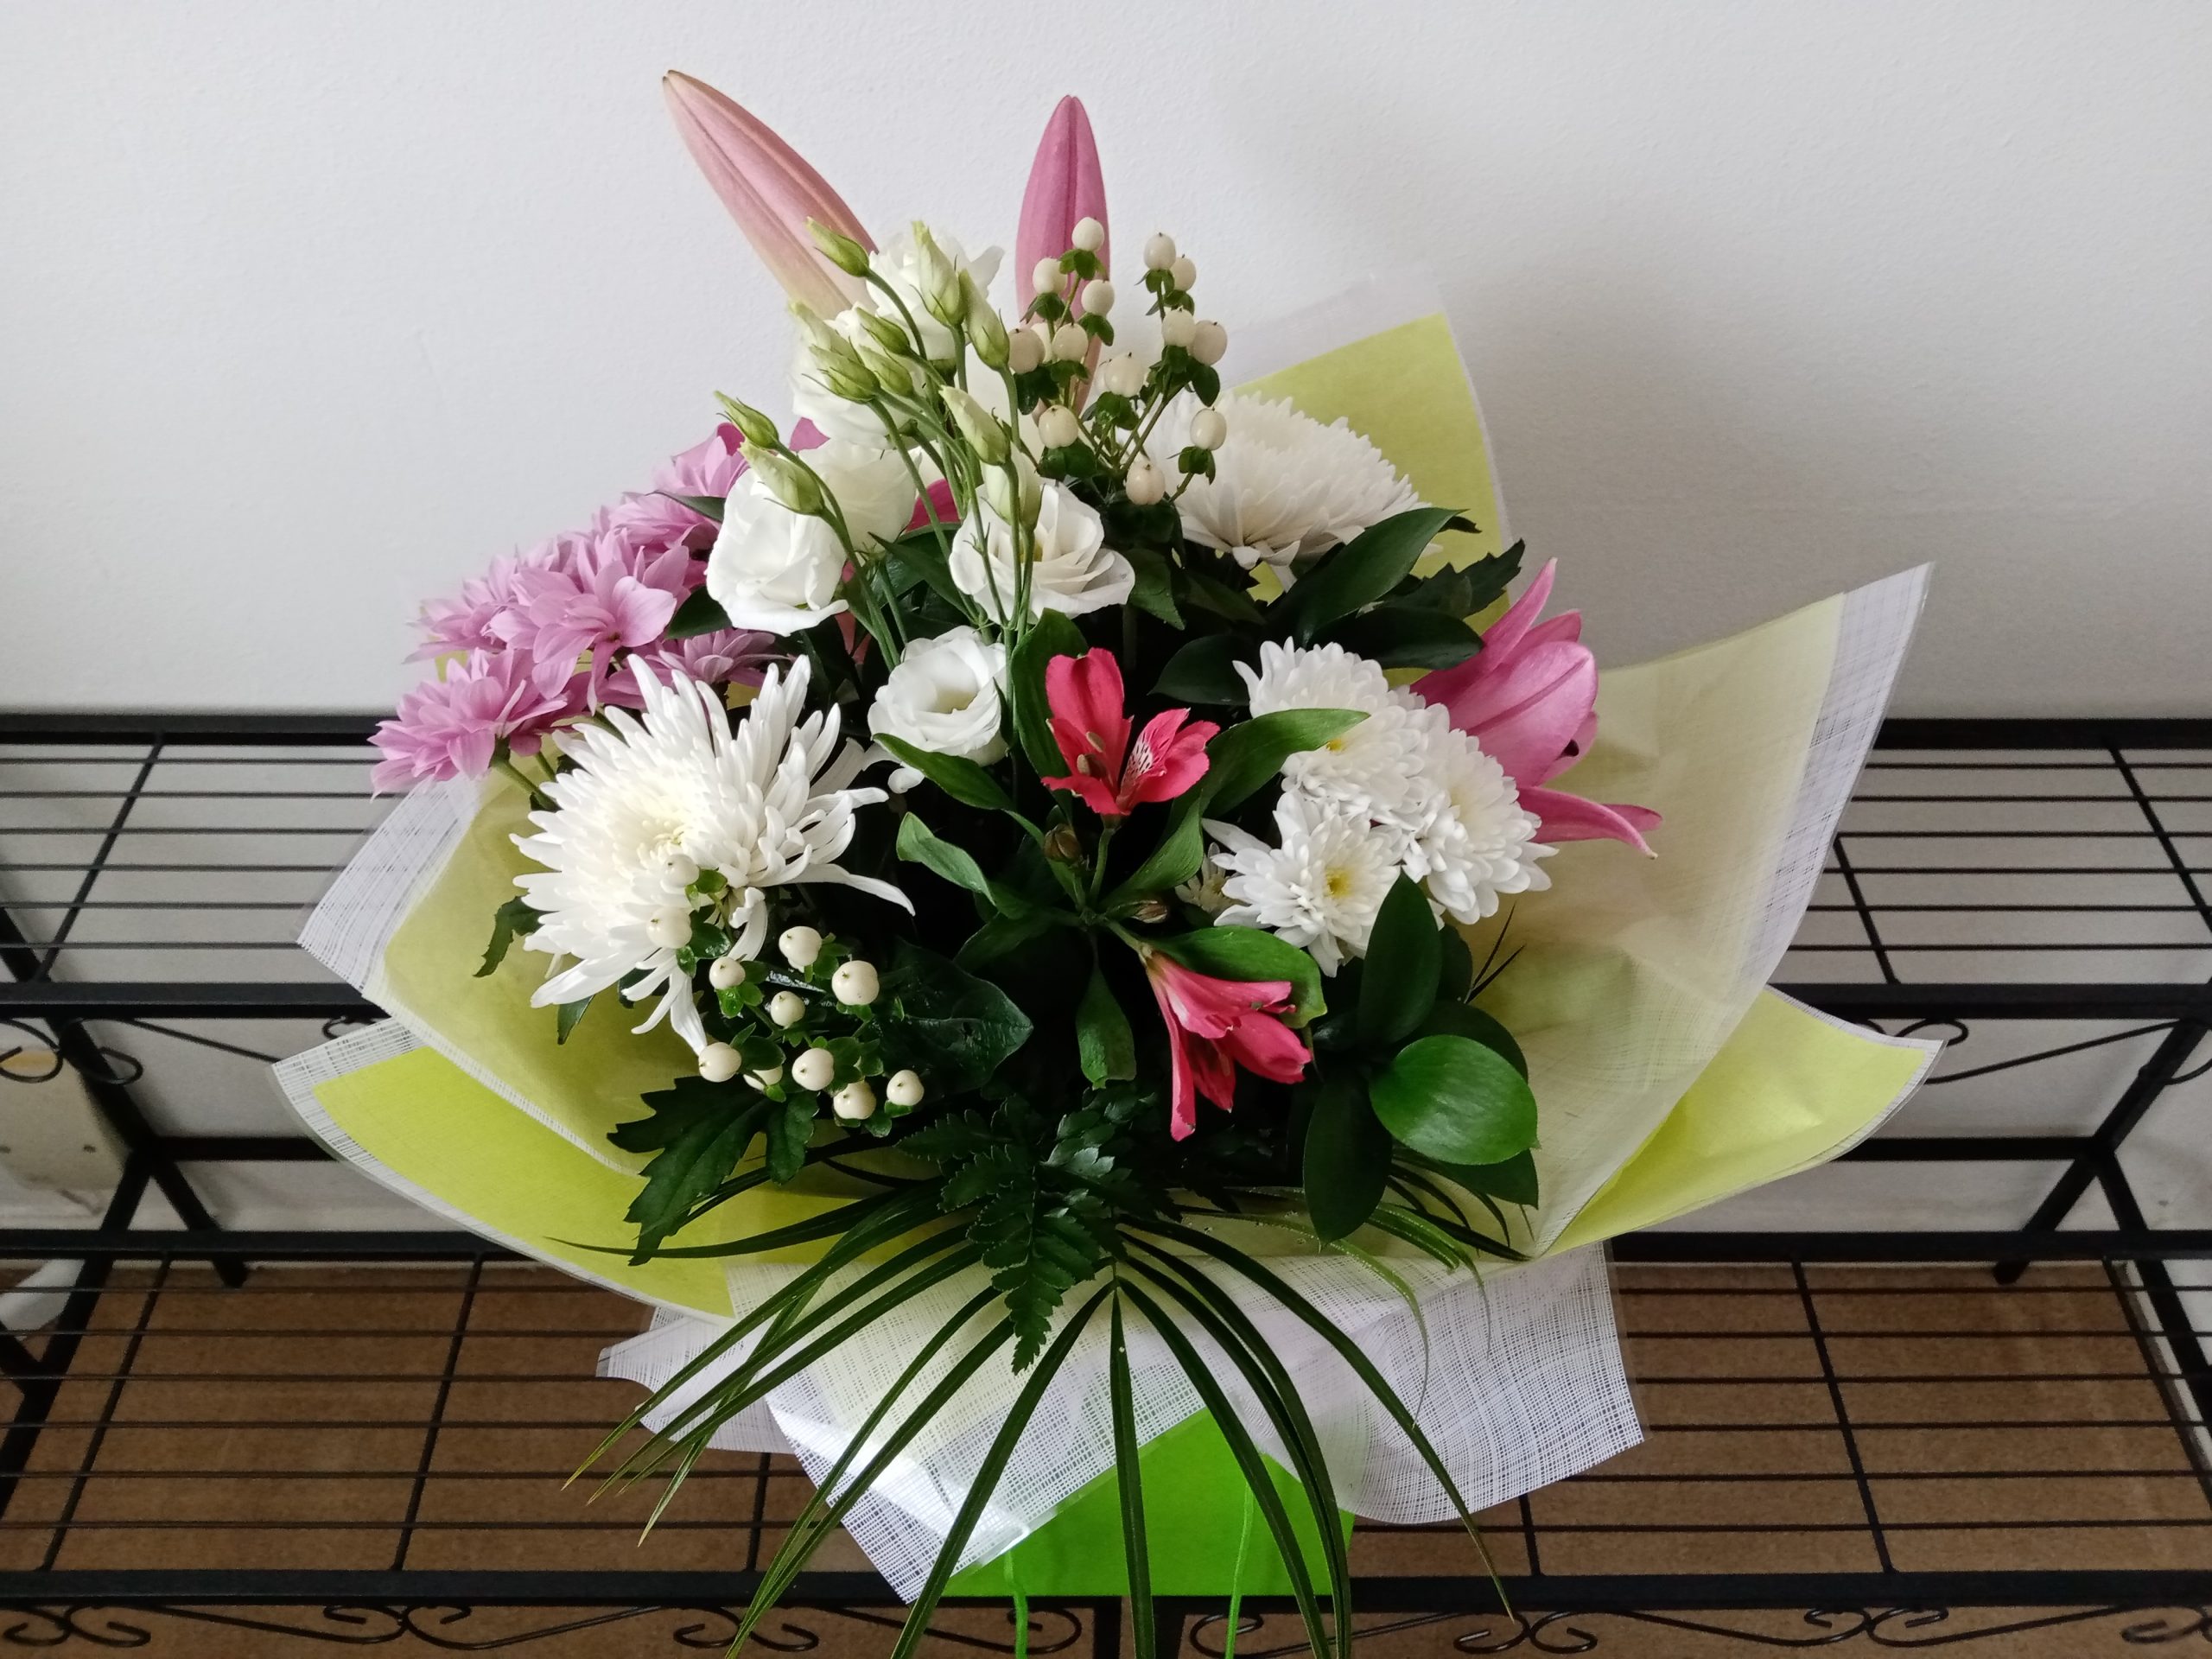 jo's florist telford flower arrangement 8